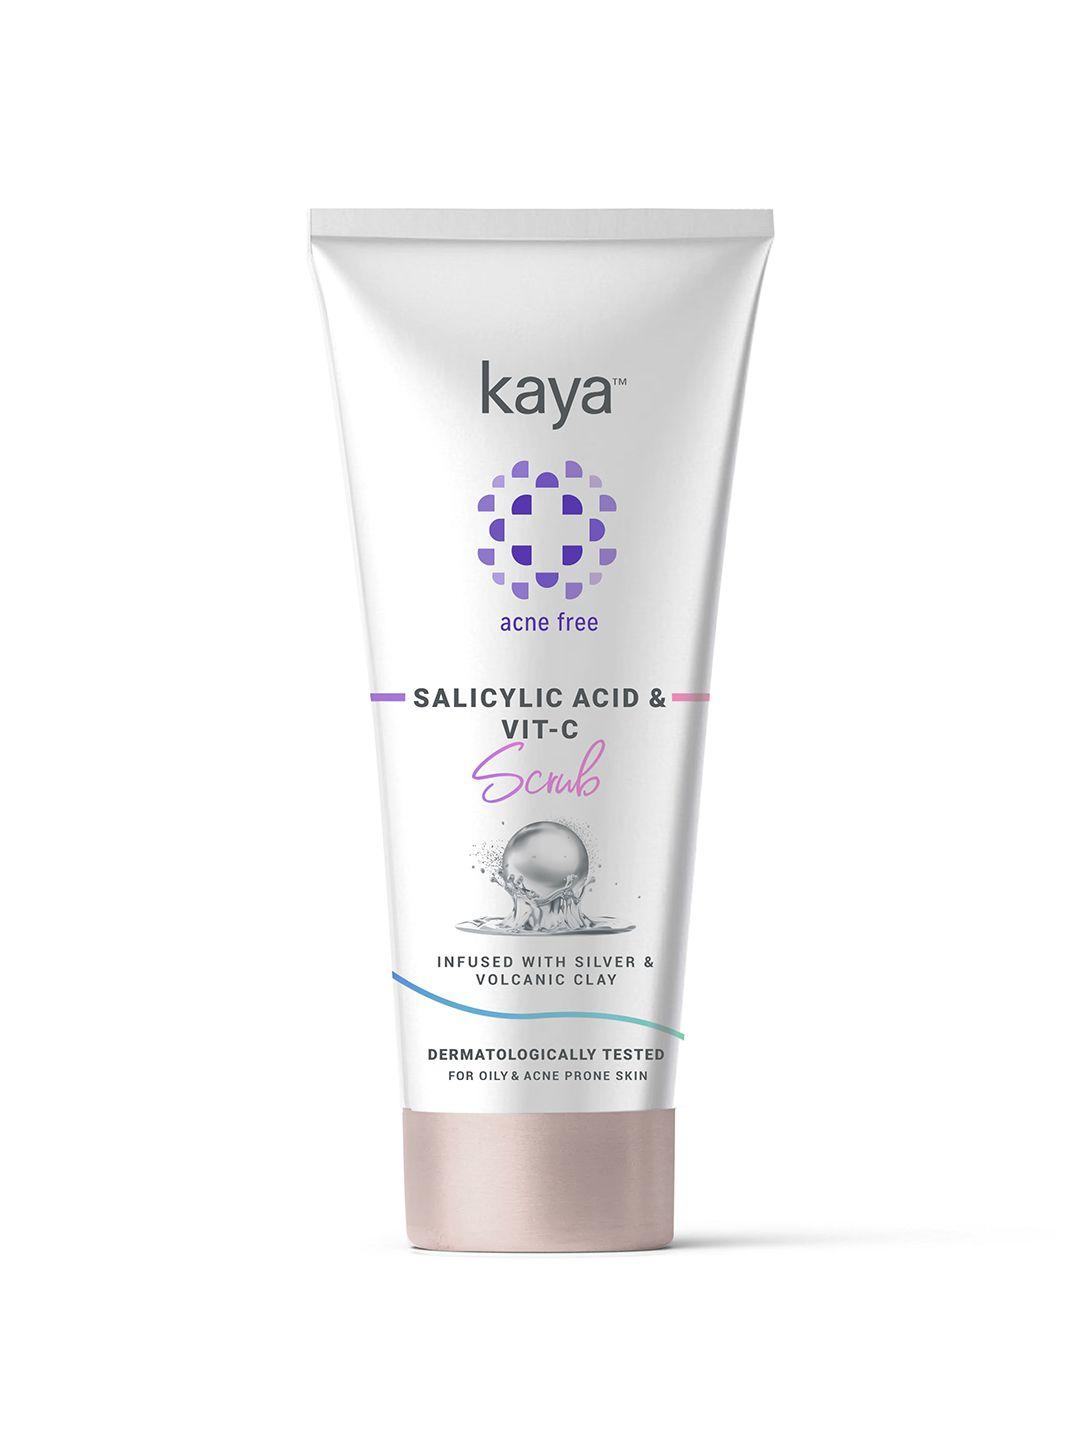 kaya salicylic acid & vitamin c face scrub with silver & volcanic clay - 75 ml